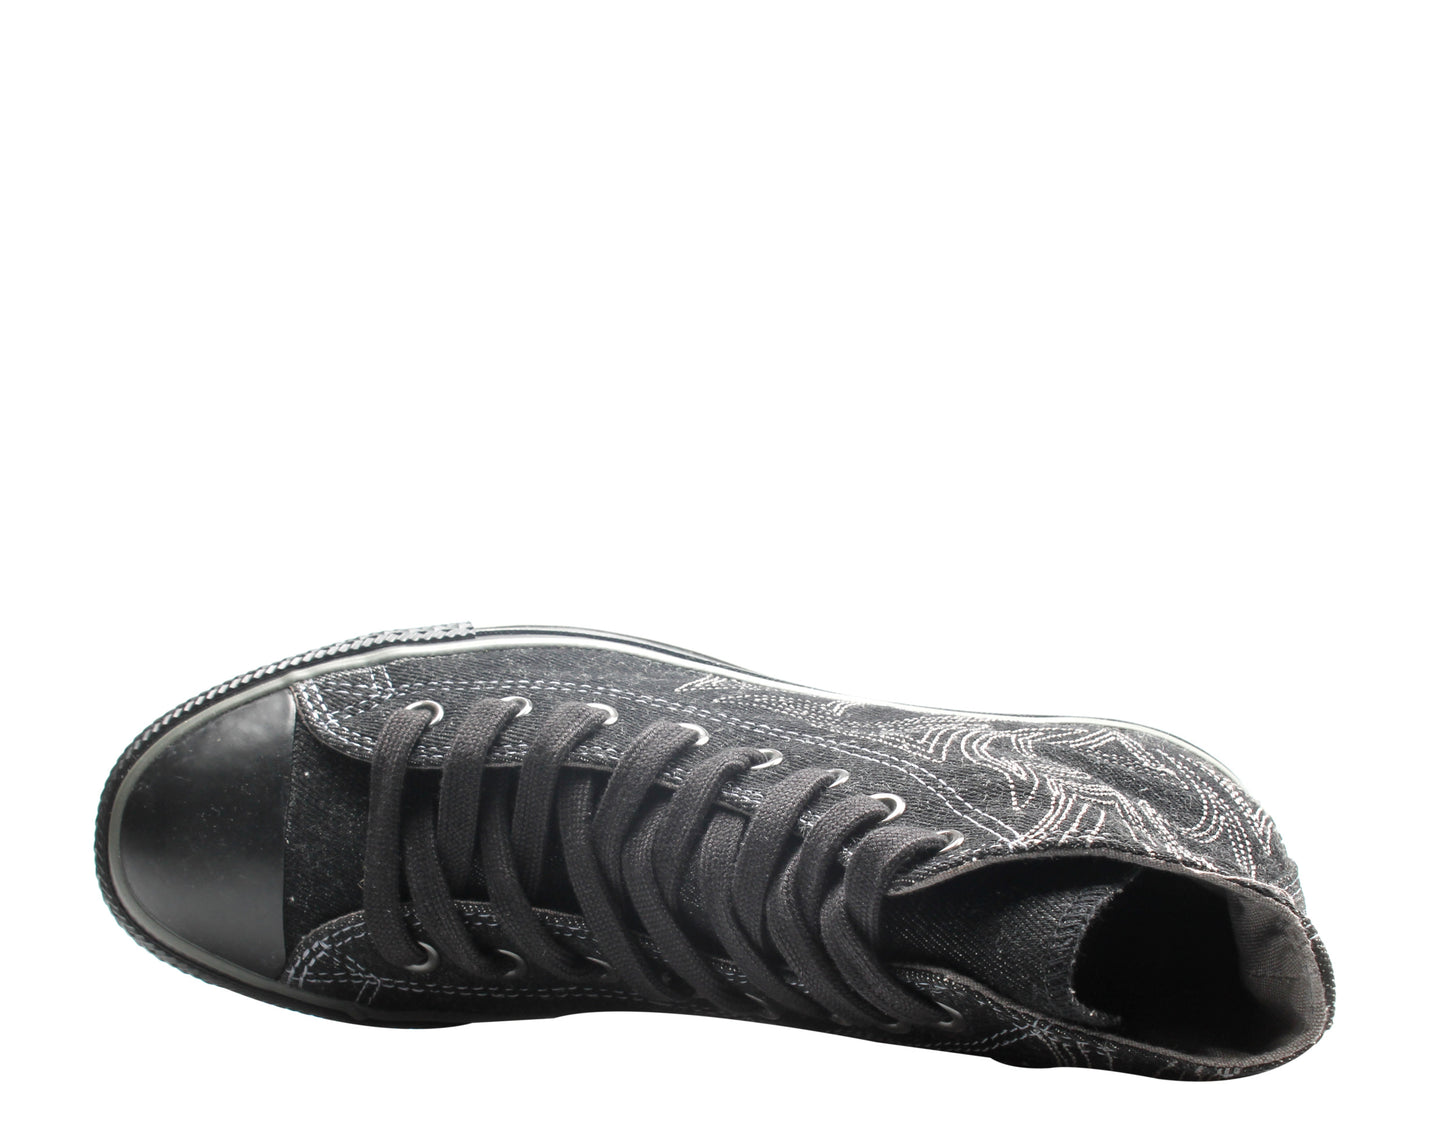 Converse Chuck Taylor All Star Denim Black/Charcoal High Top Sneakers 1V230